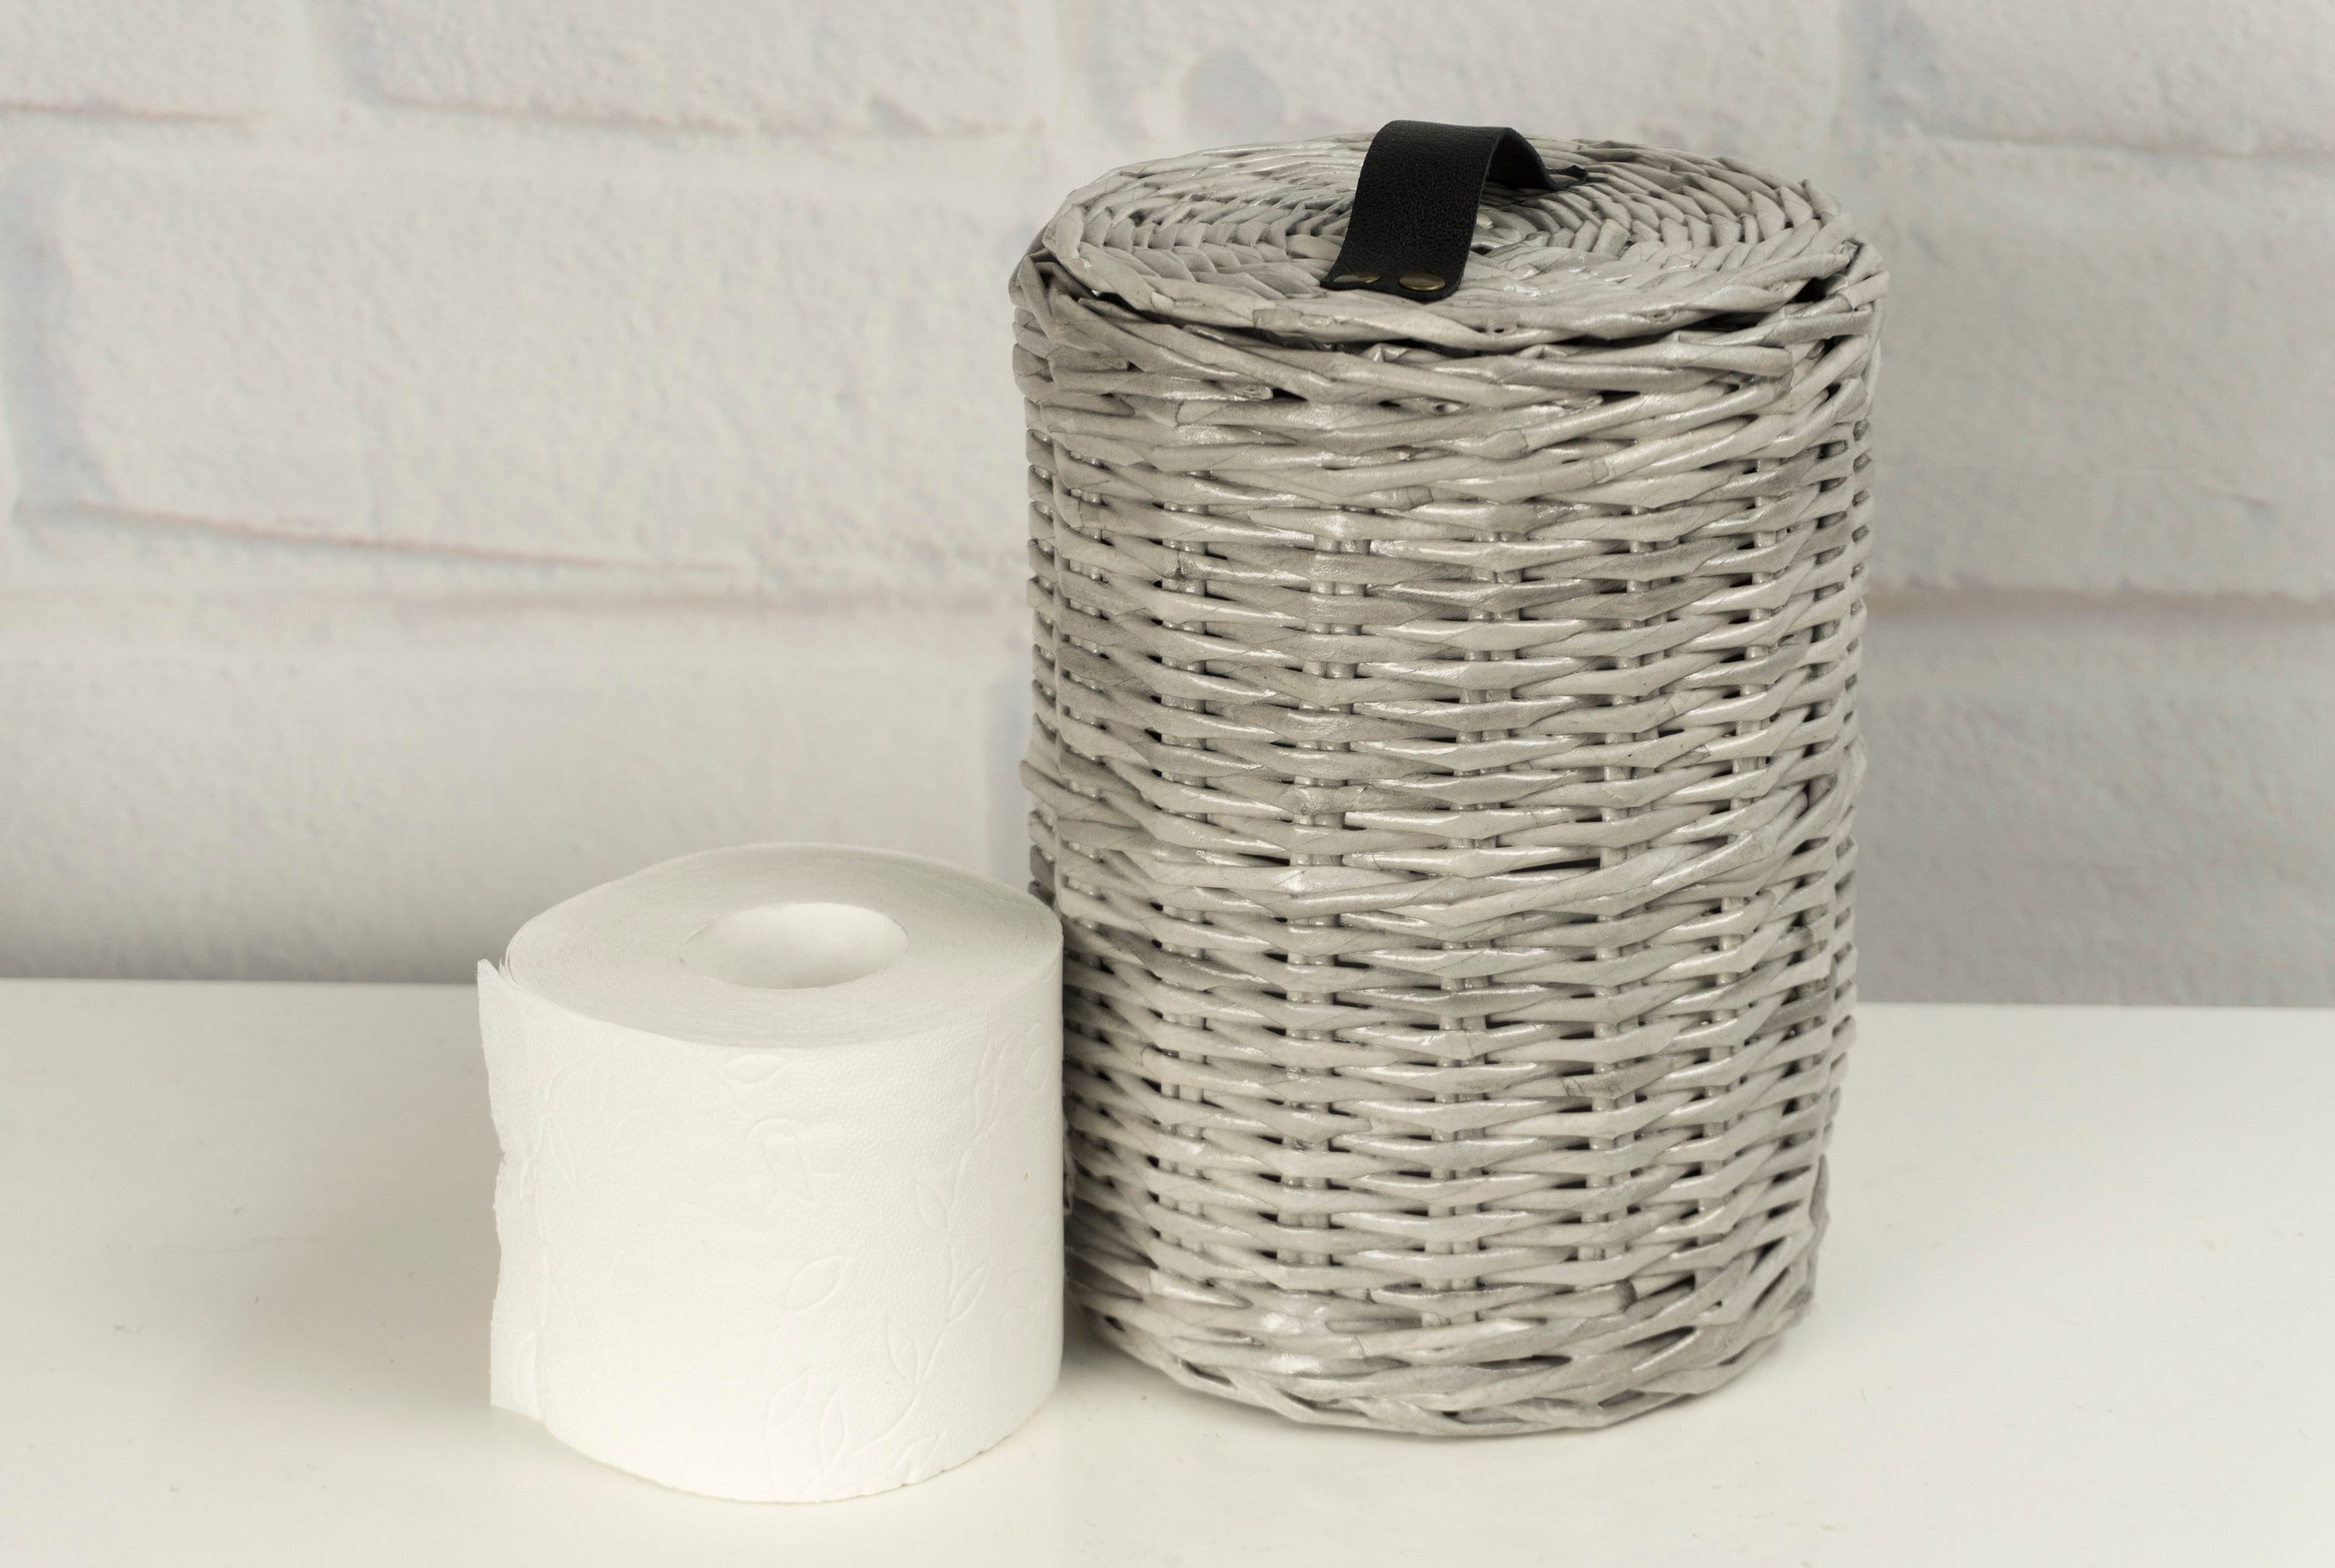 Portarrollos de papel higiénico de madera rústica -  España  Wood  toilet paper holder, Wood furniture diy, Diy cardboard furniture